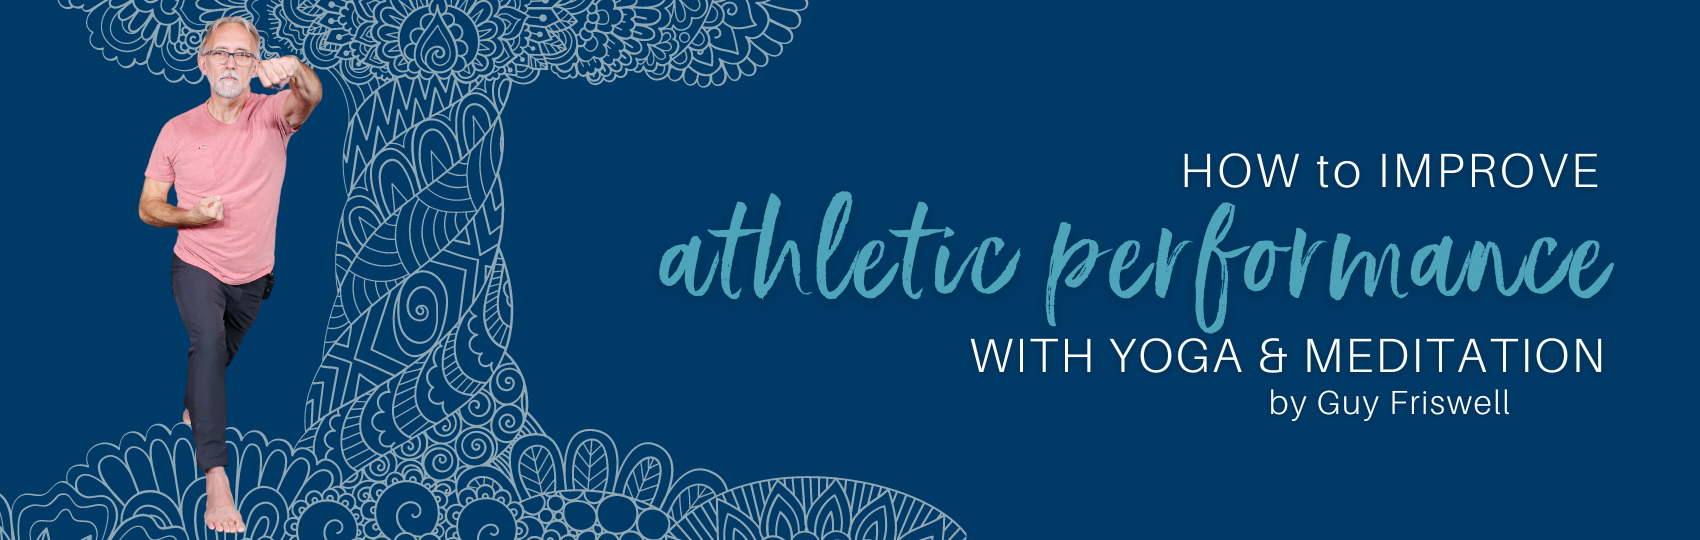 Improving Athletic Performance Using Yoga Blog Banner